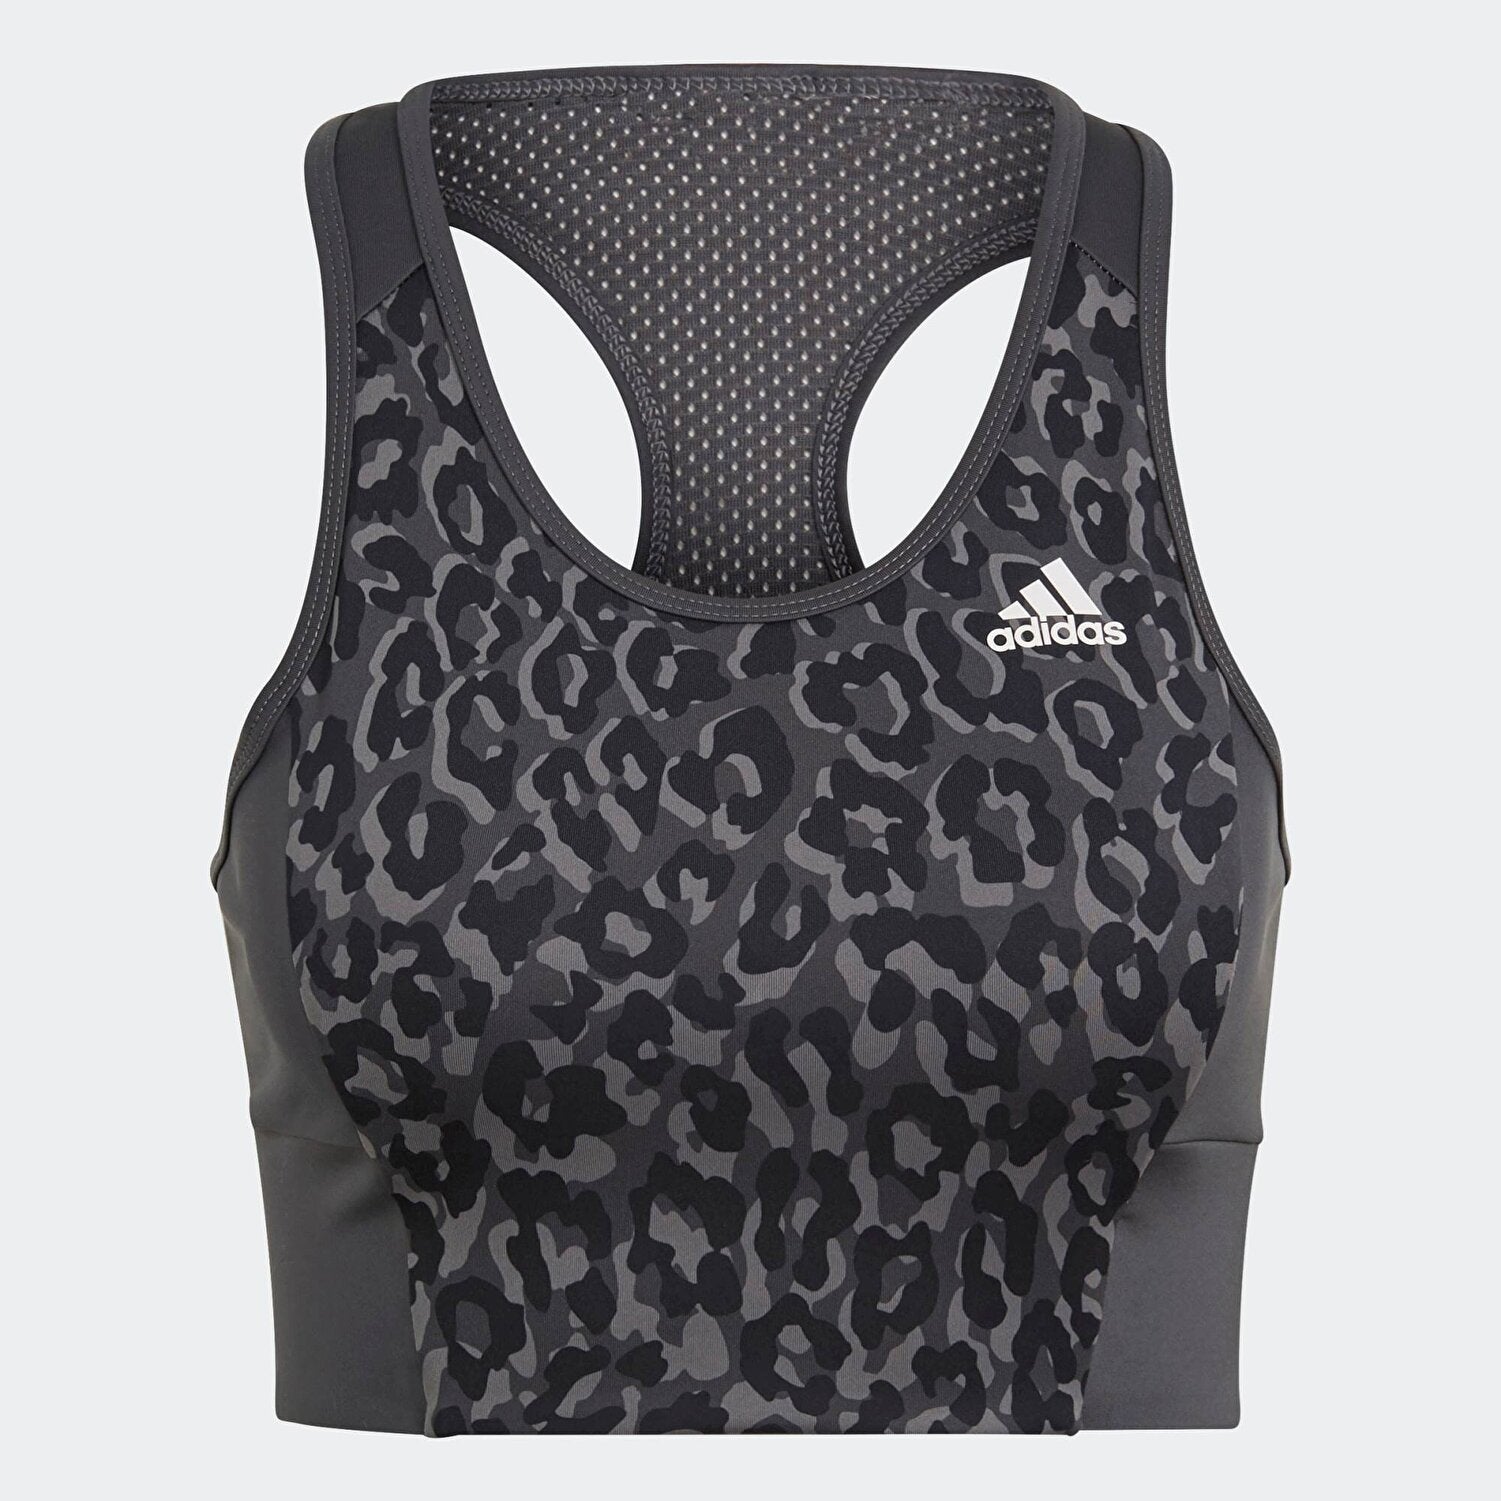 Adidas AREOREADY leopard print sports bra